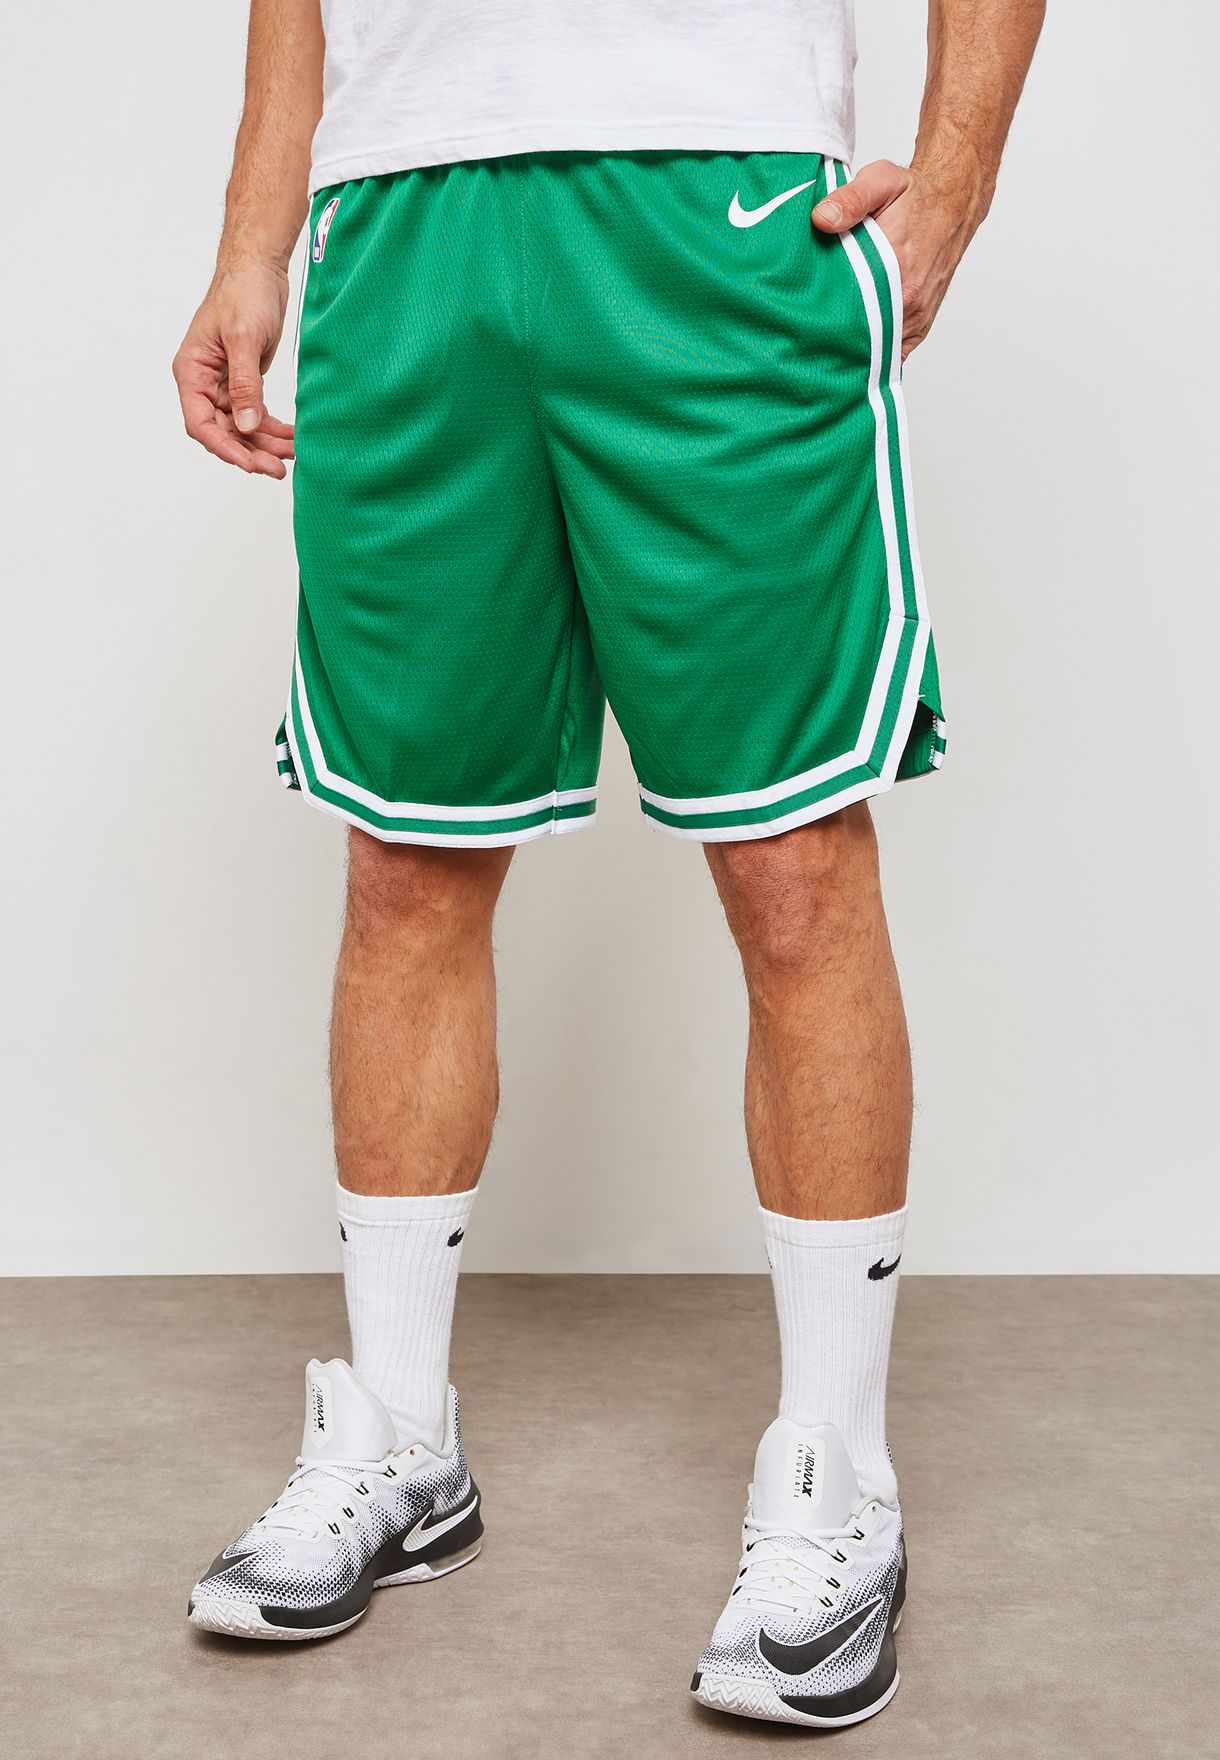 celtics shorts